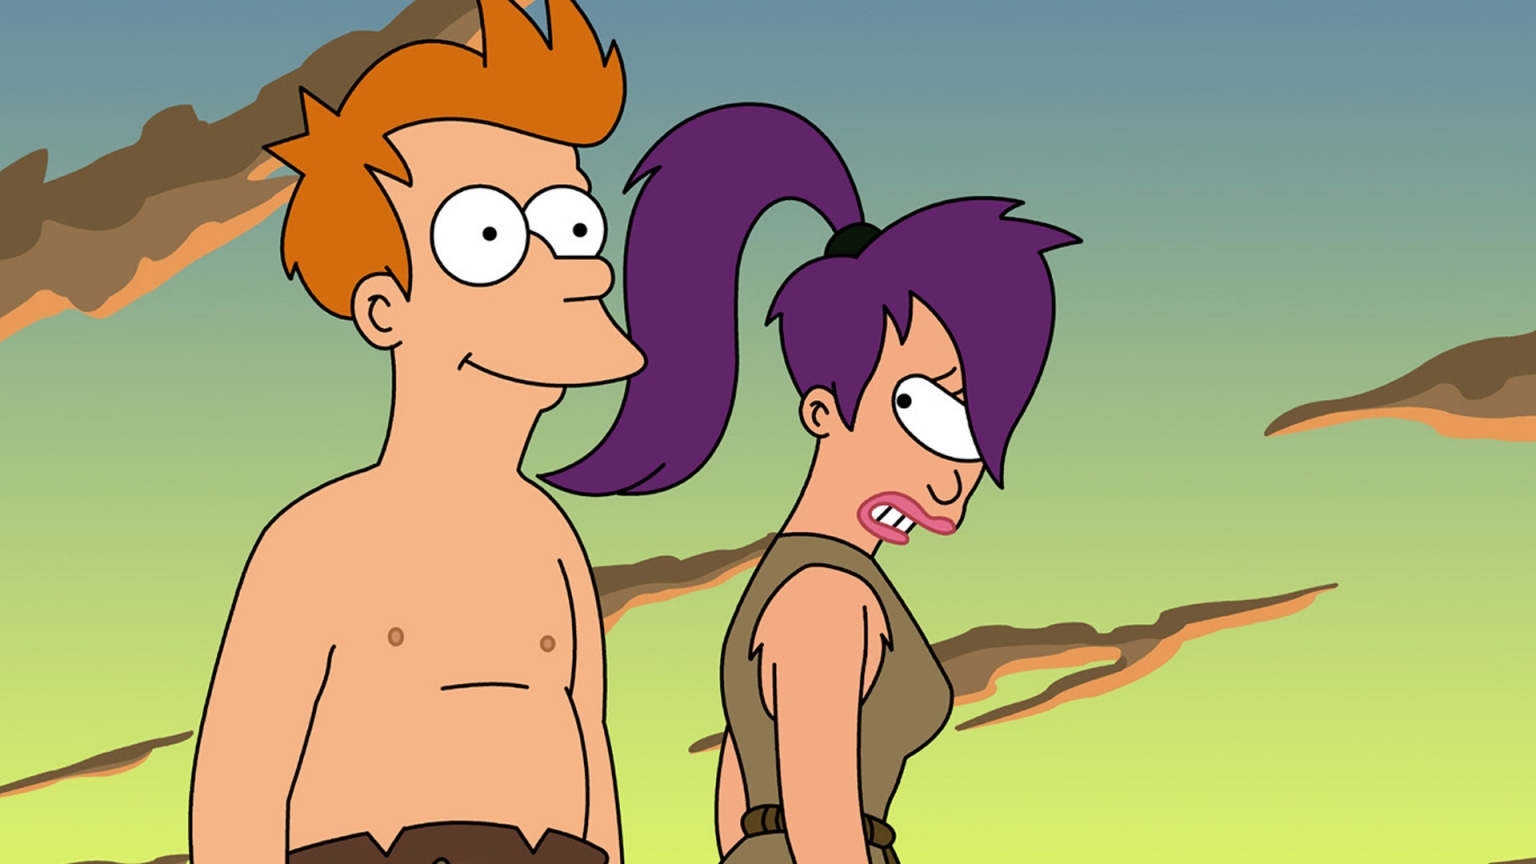 Futurama Fry and Leela for 1536 x 864 HDTV resolution